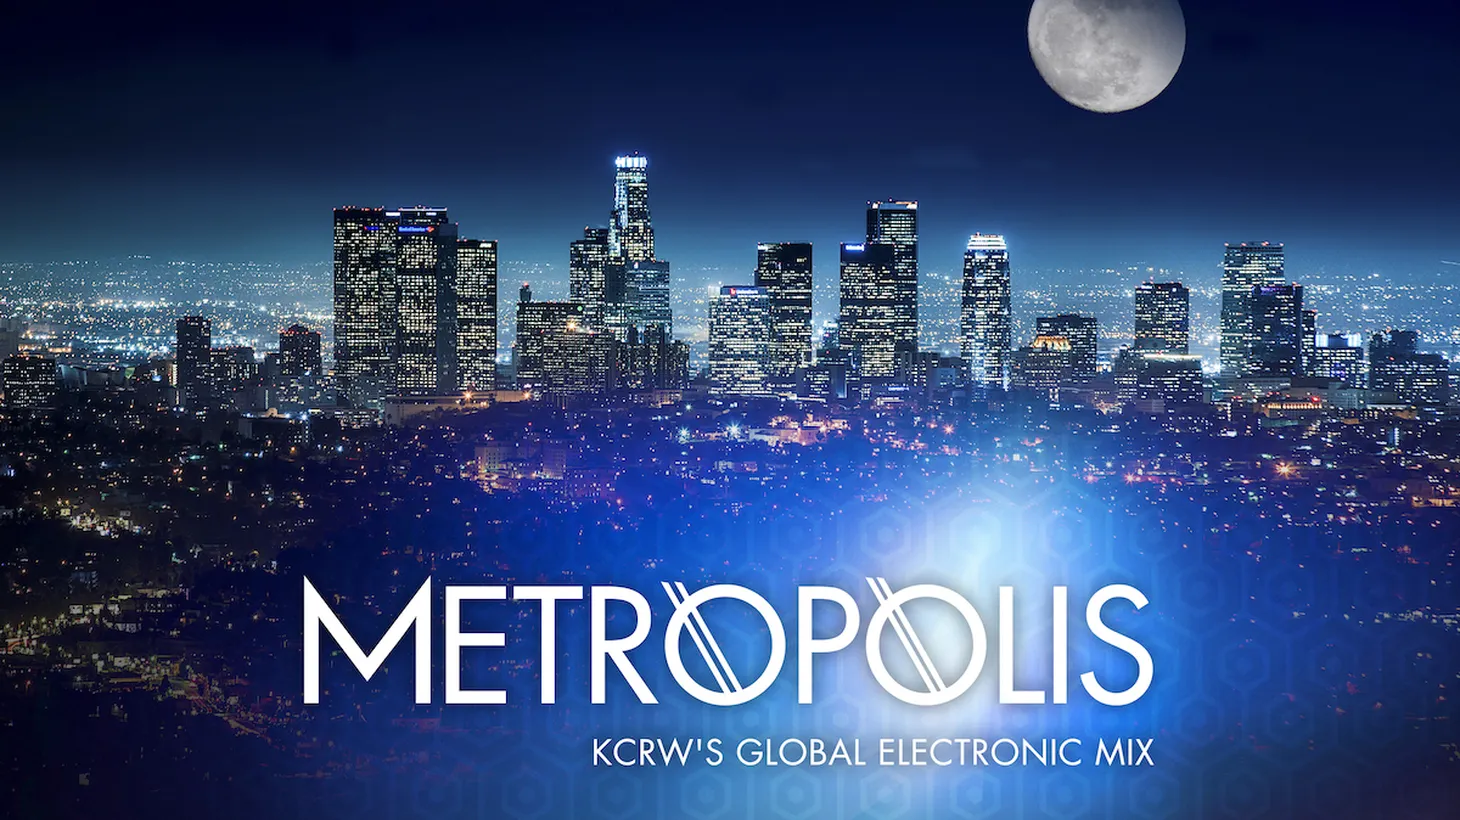 Metropolis playlist, January 22, 2022.